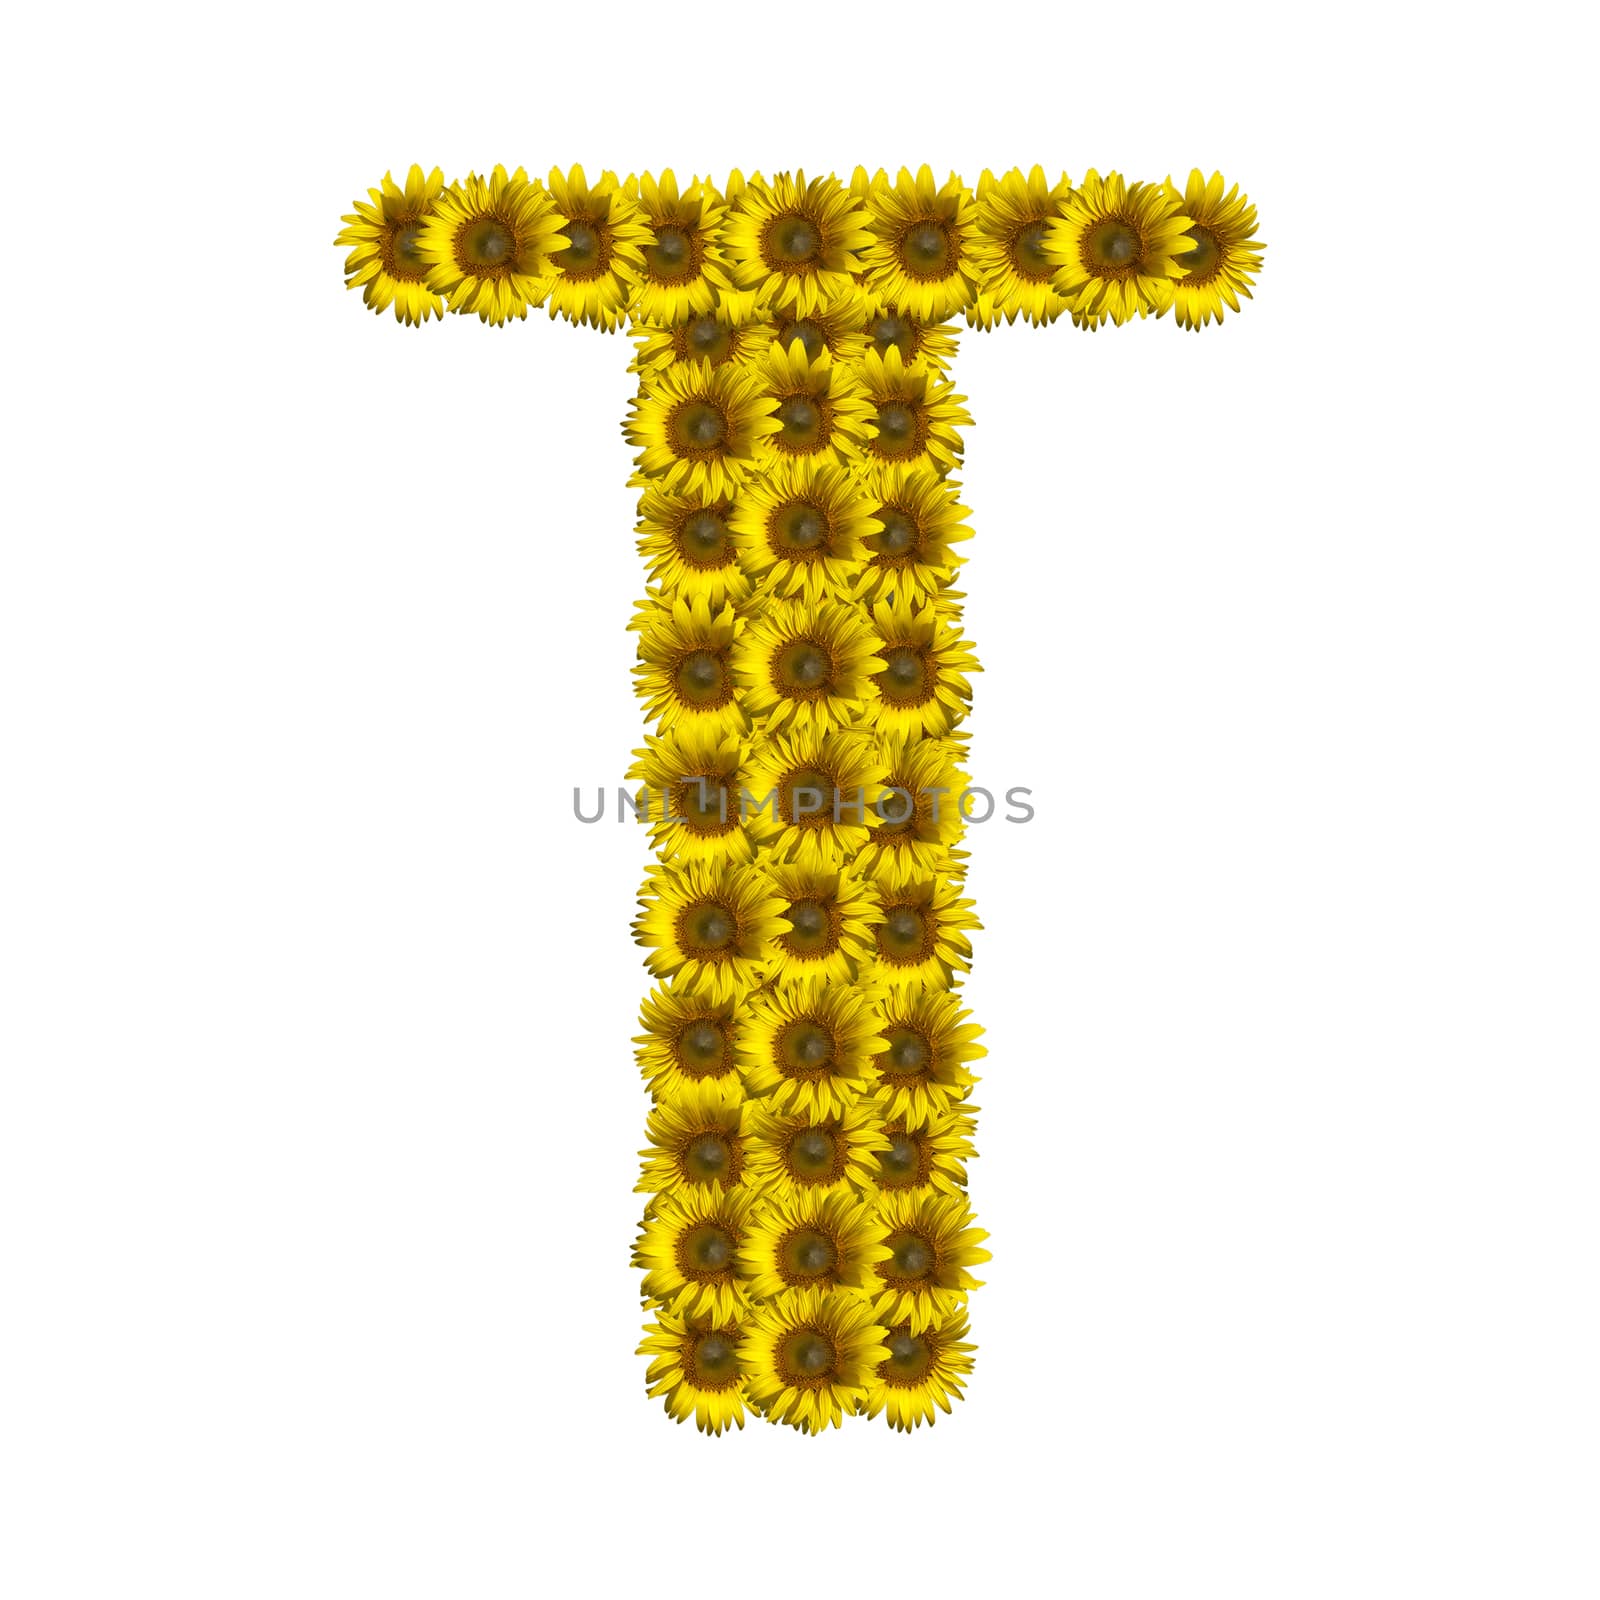 Sunflower alphabet isolated on white background, letter T